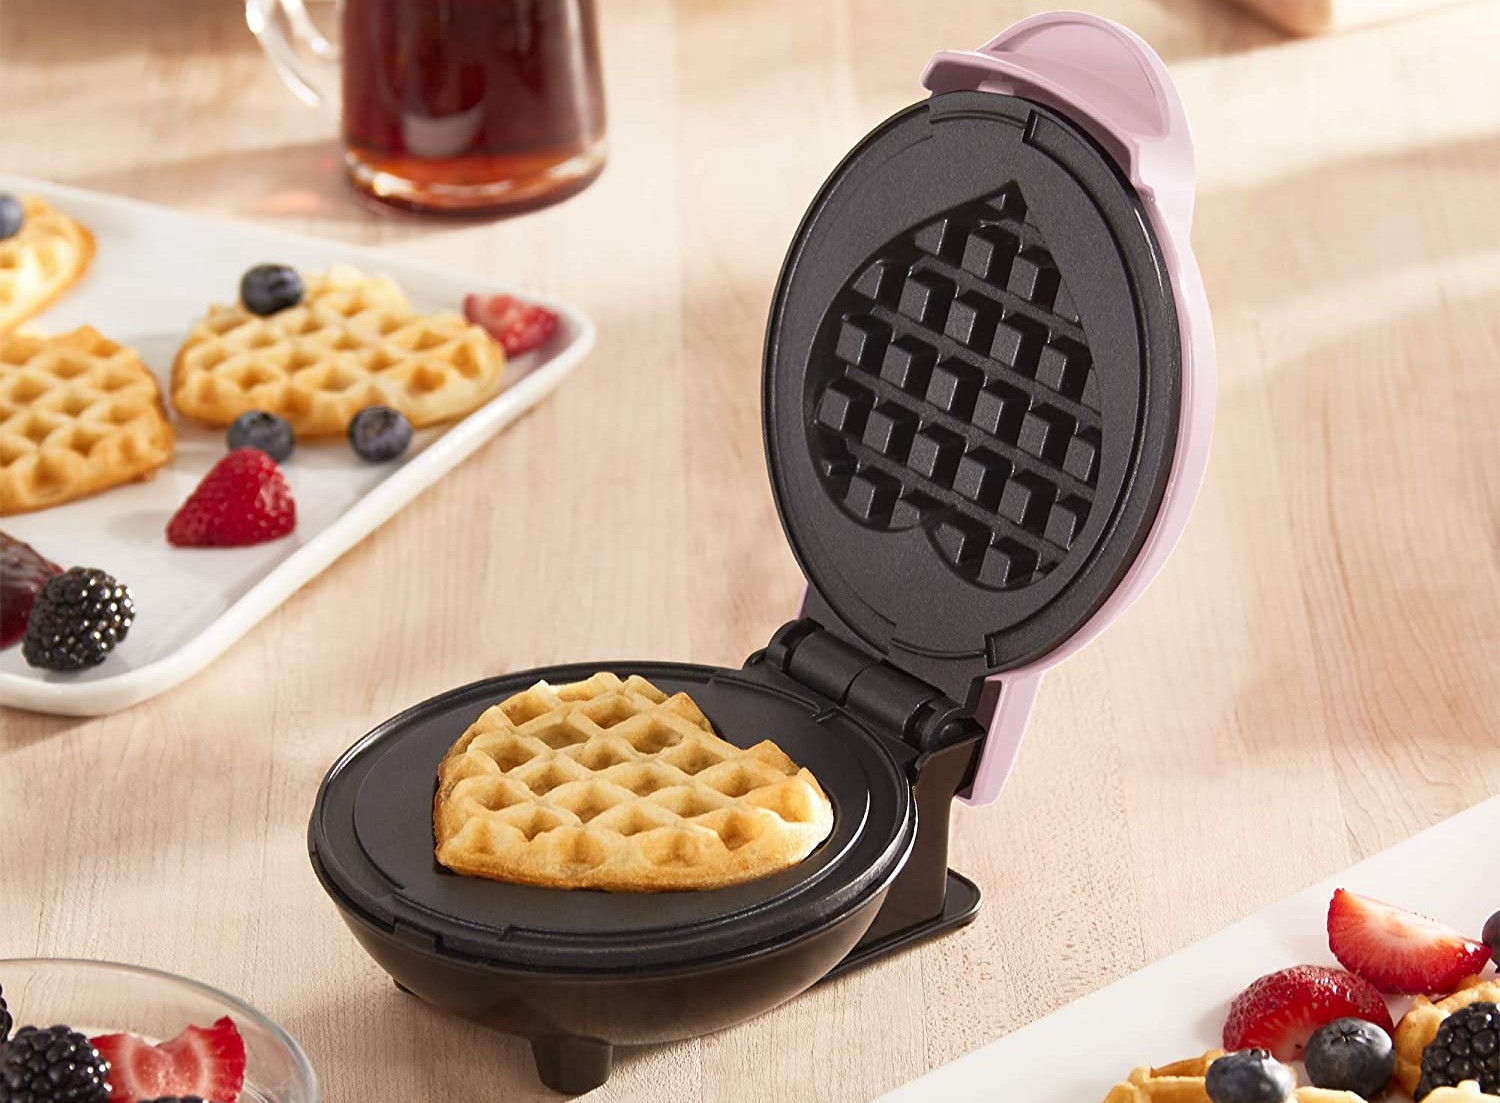 https://www.digitaltrends.com/wp-content/uploads/2020/03/dash-heart-mini-waffle-maker.jpg?fit=500%2C369&p=1